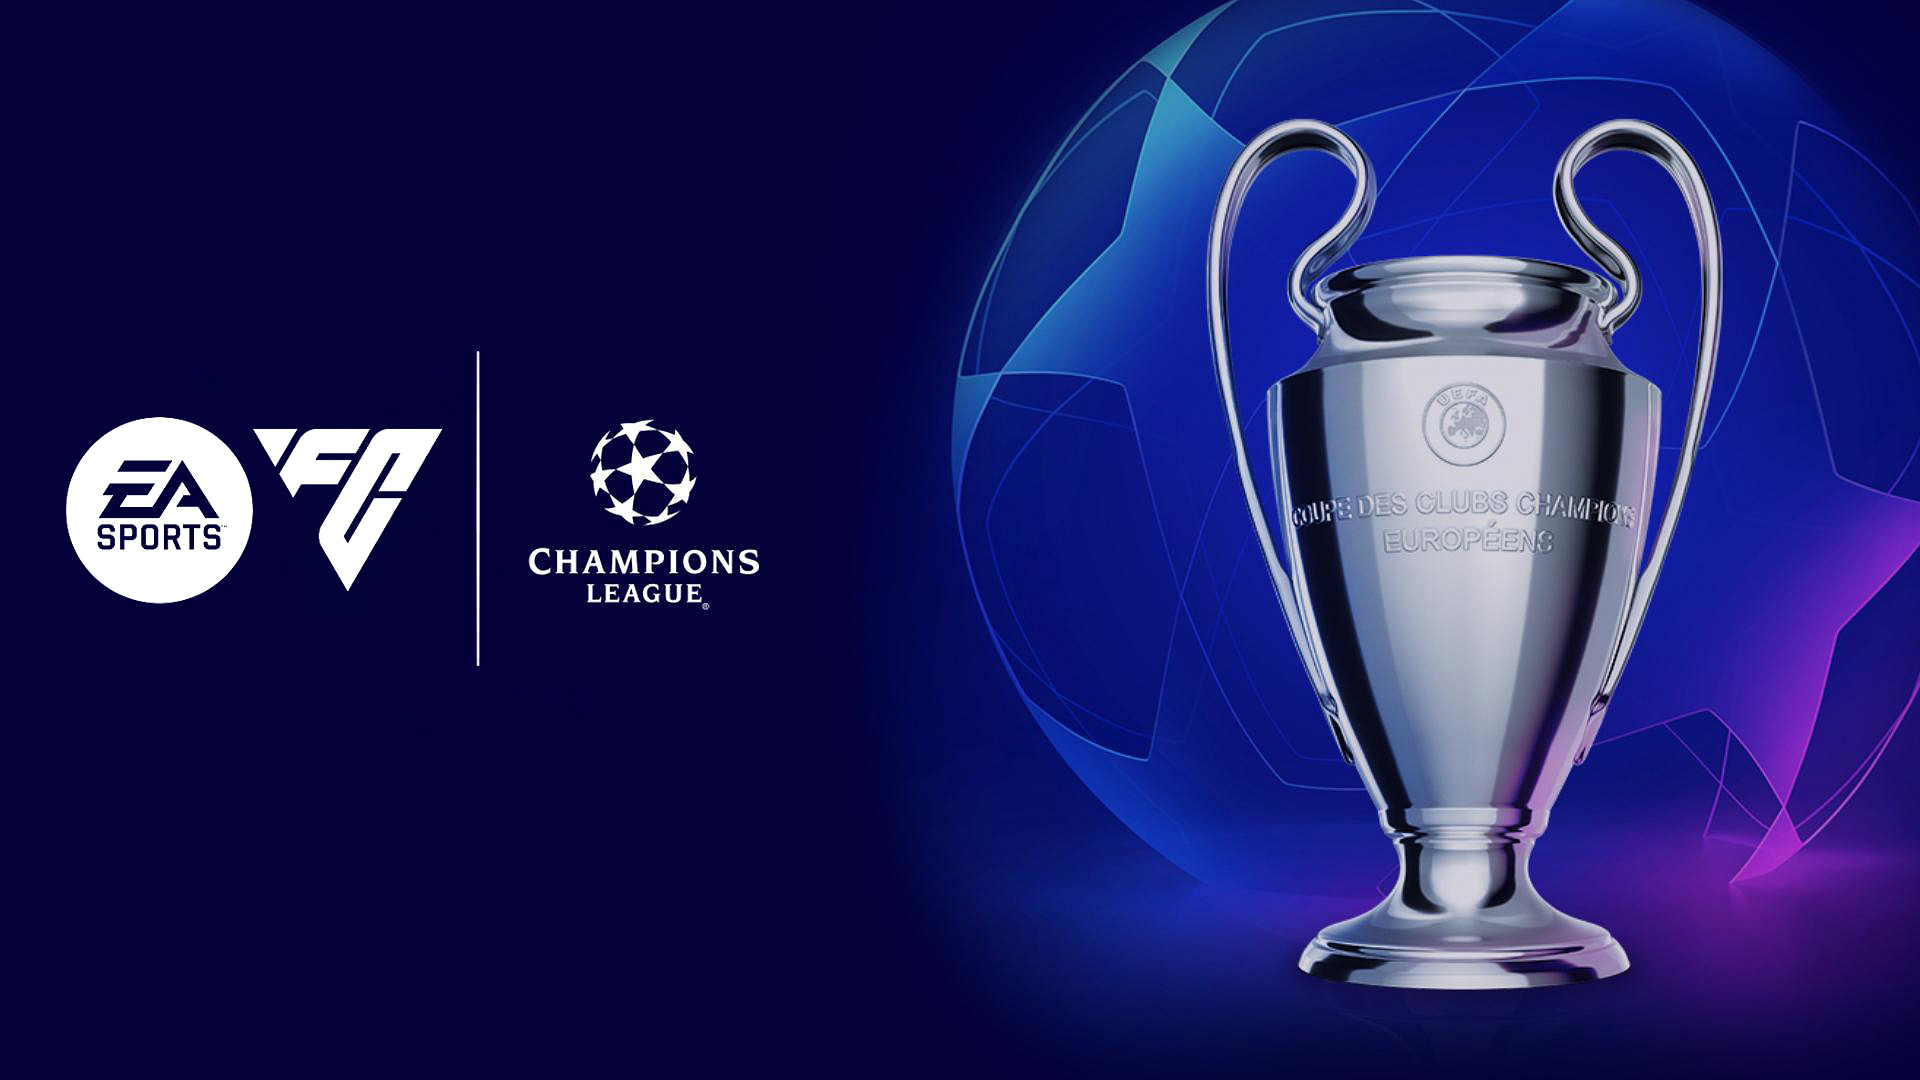 Head to Head & Champions League [EA FC Mobile 24] 